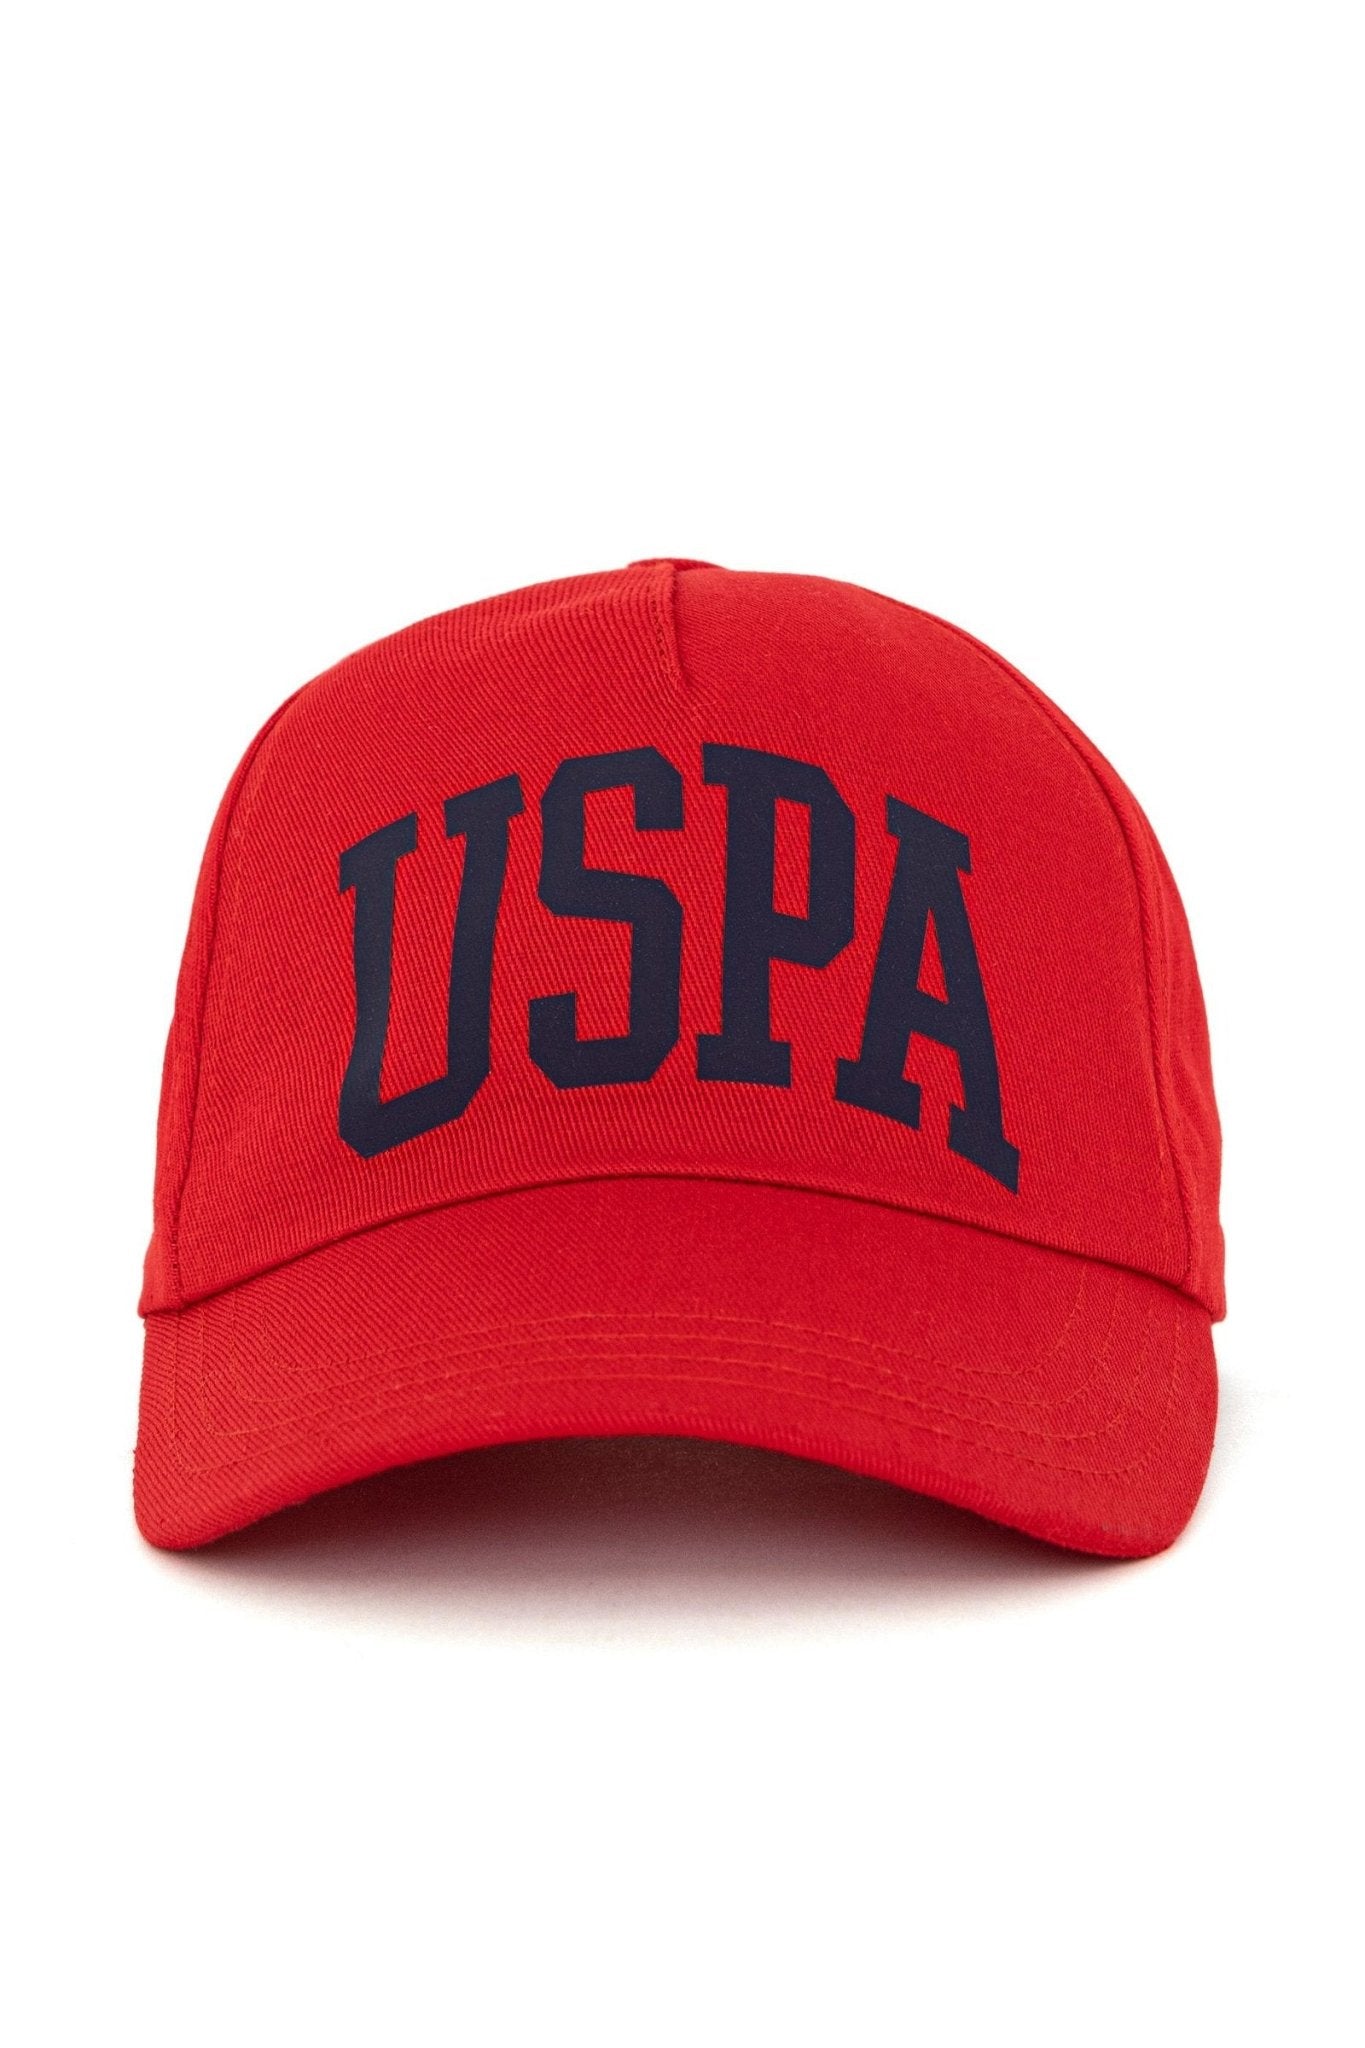 USPA Men's Red Hat